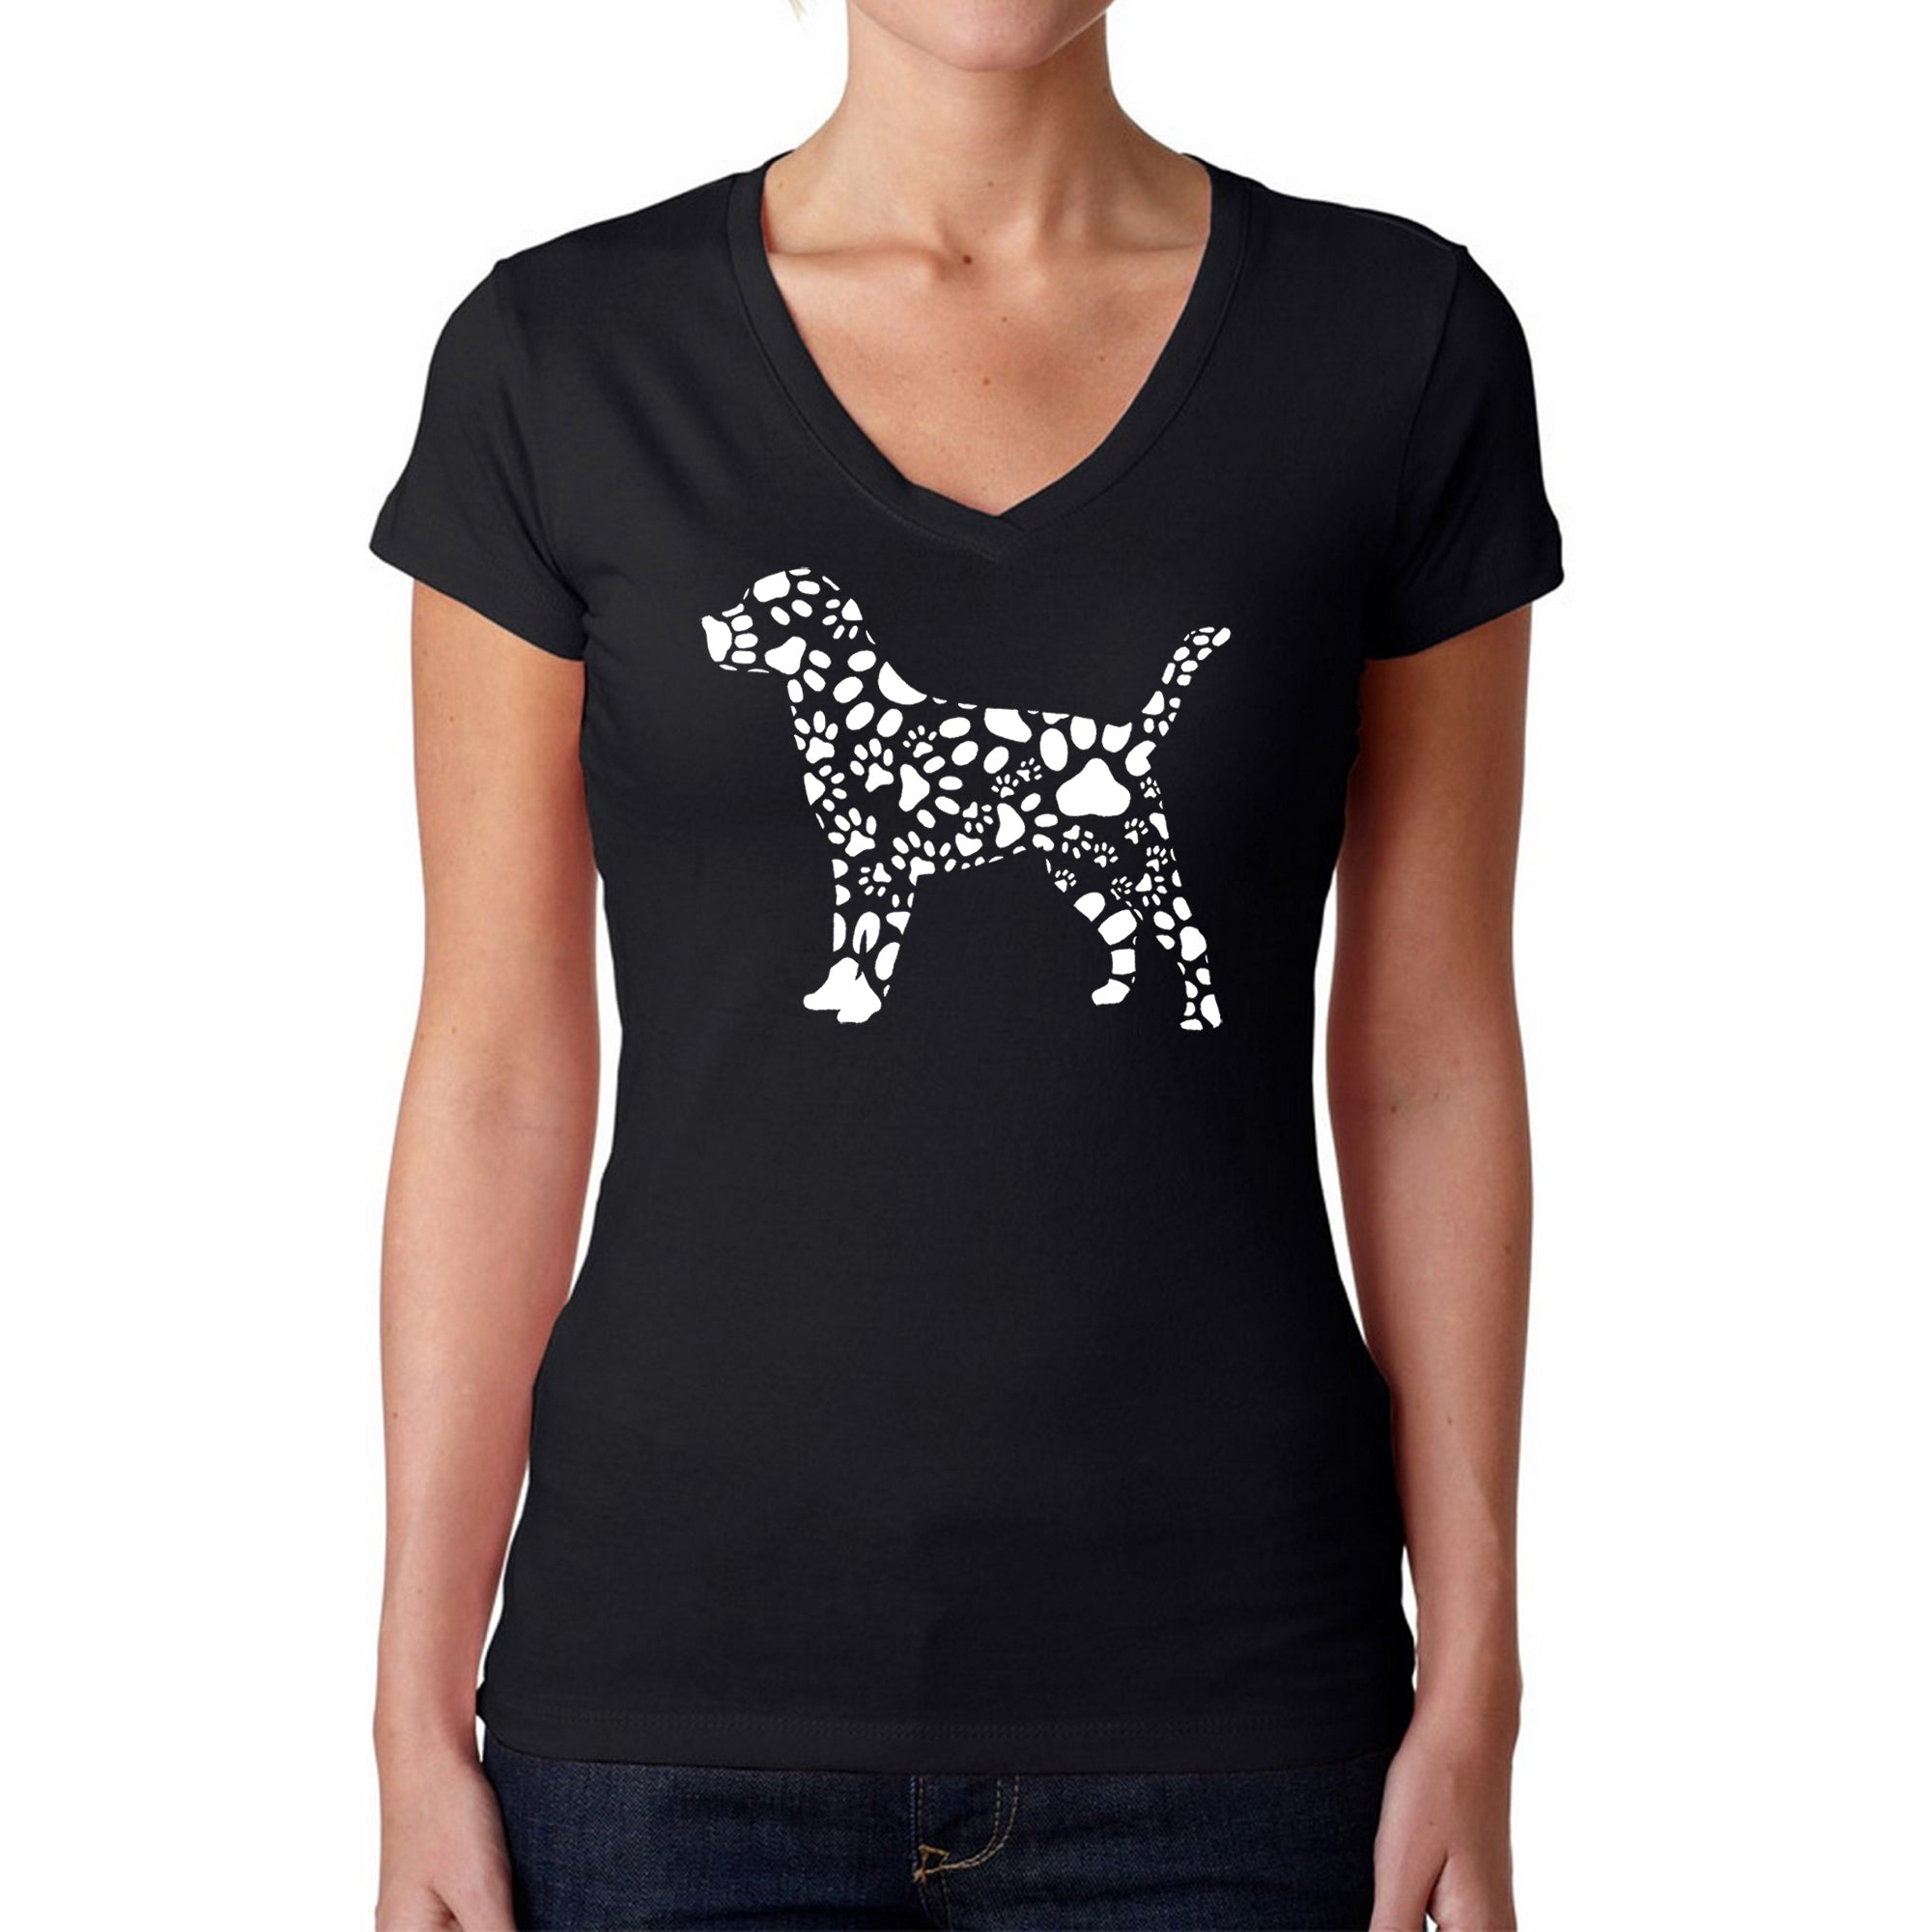 Dog Paw Prints - Women's Word Art V-Neck T-Shirt - Black - Medium